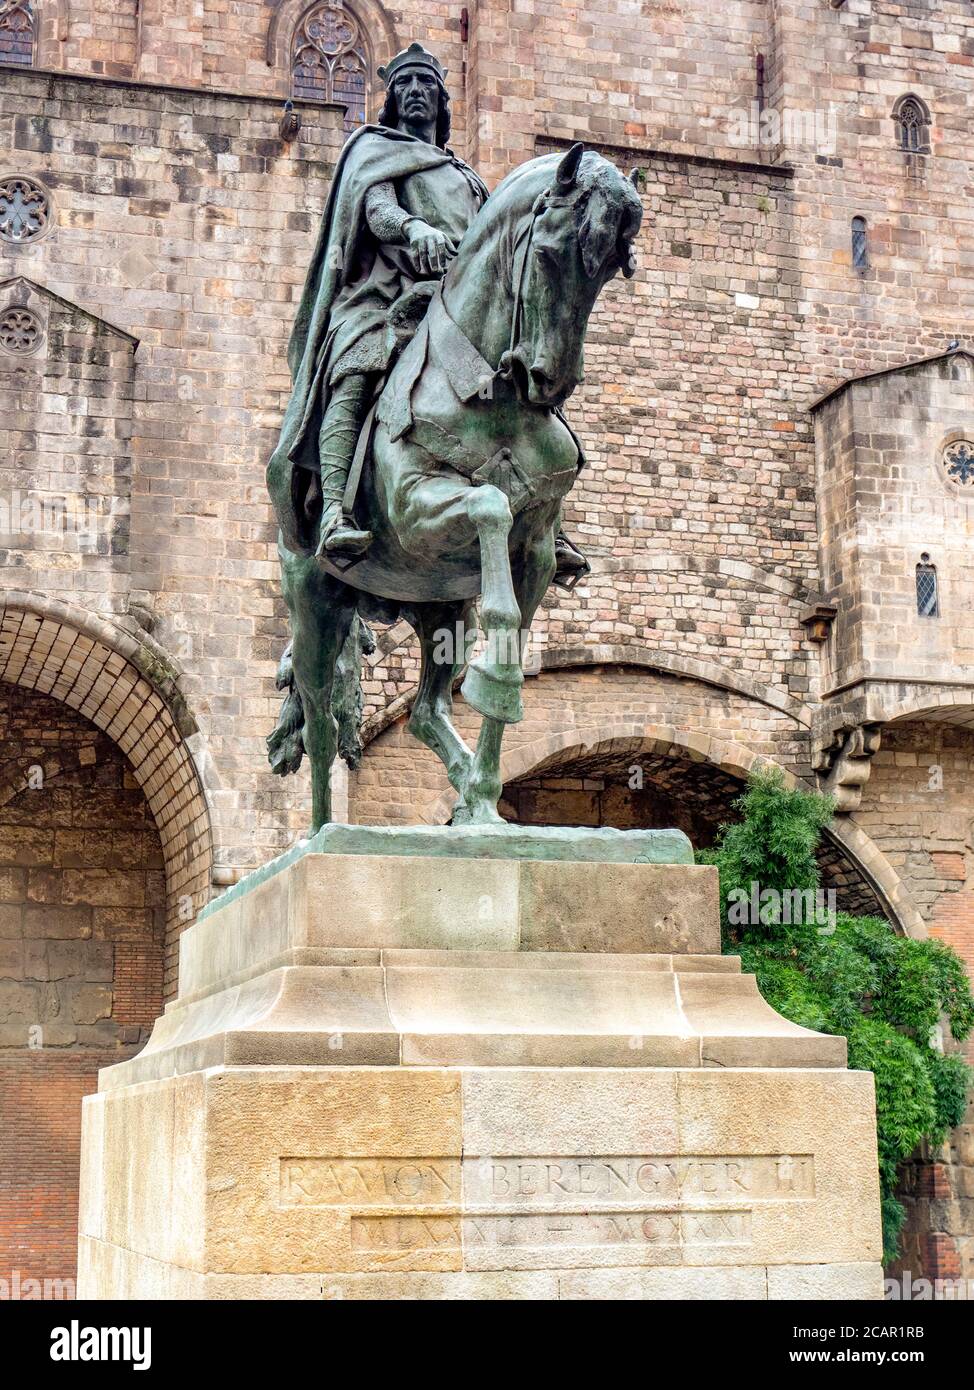 4 March 2020: Barcelona, Spain - Equestrian statue of Ramon Berenguer III, Count of Barcelona, on Via Laietana, Barcelona, by Josep Llimona. Stock Photo